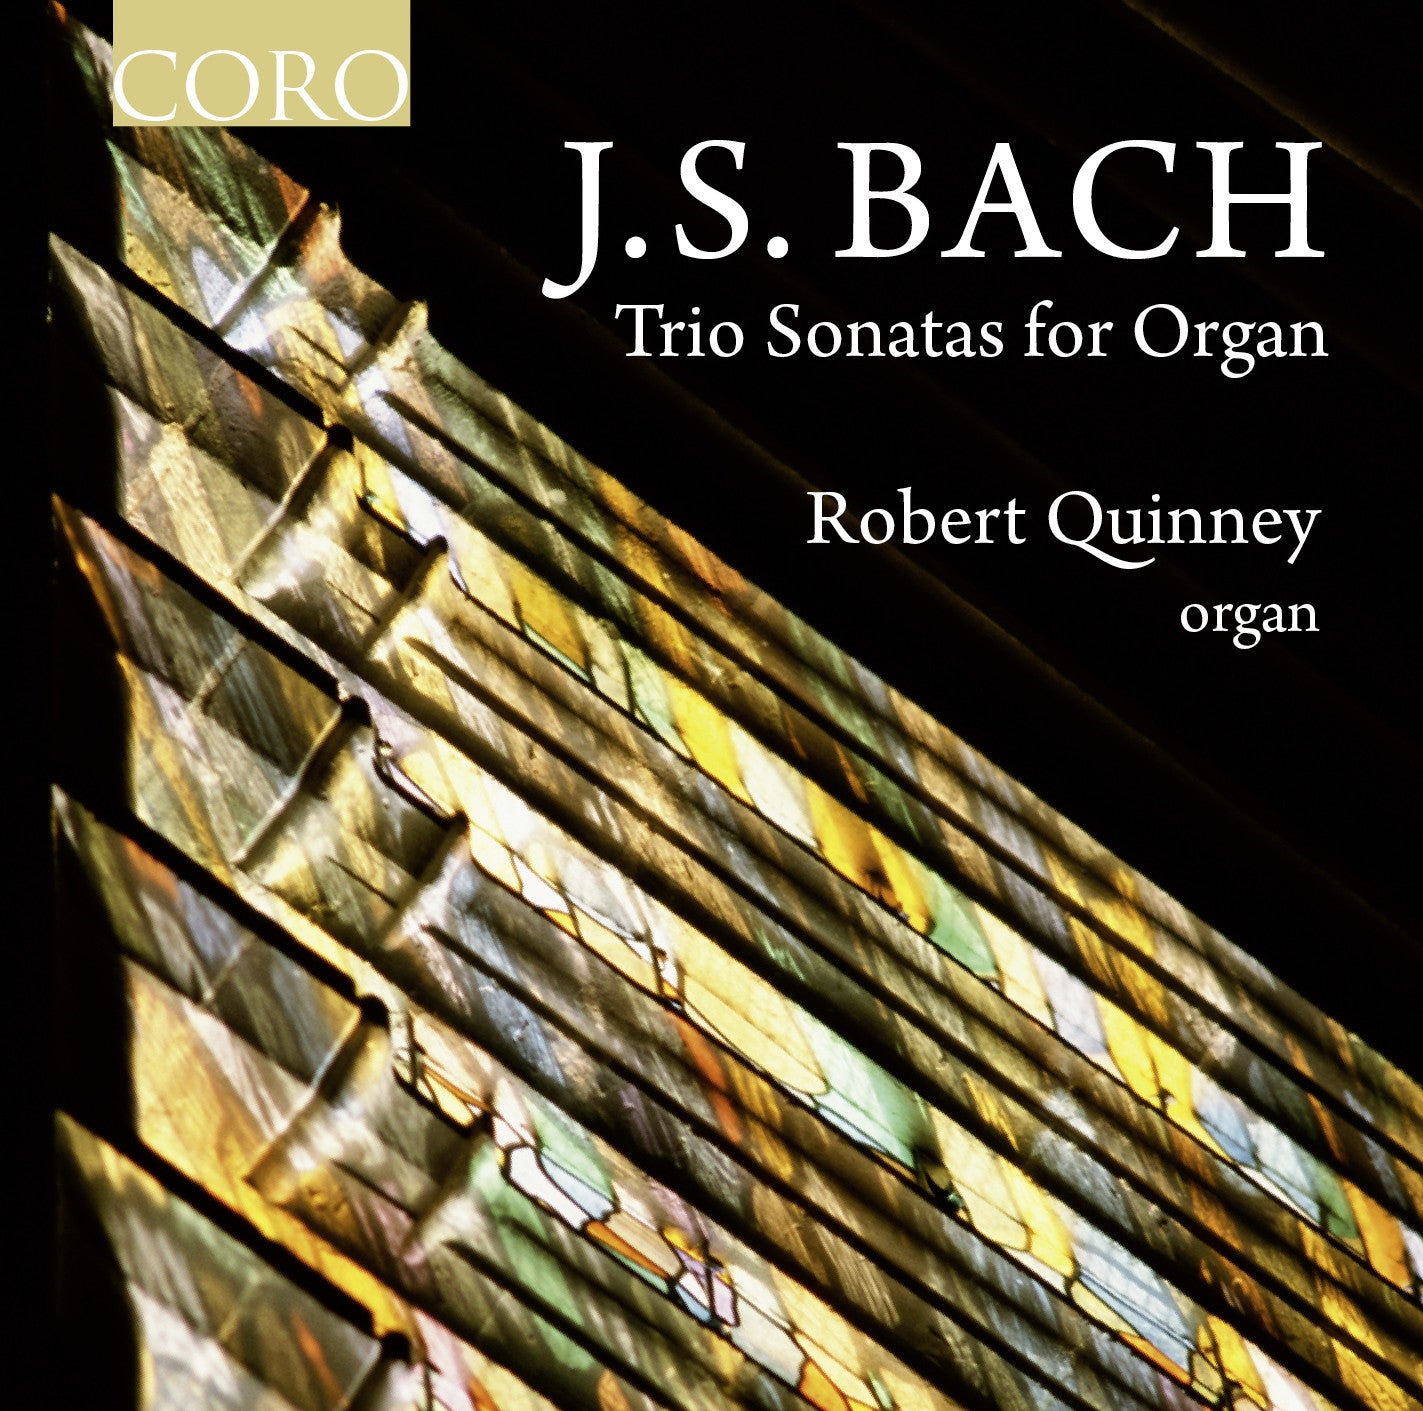 Бах трио. Robert Quinney. Bach j.s. – Trio Sonatas for Organ BWV 525-530, Peter Hurford. Bach Trio слушать альбом.